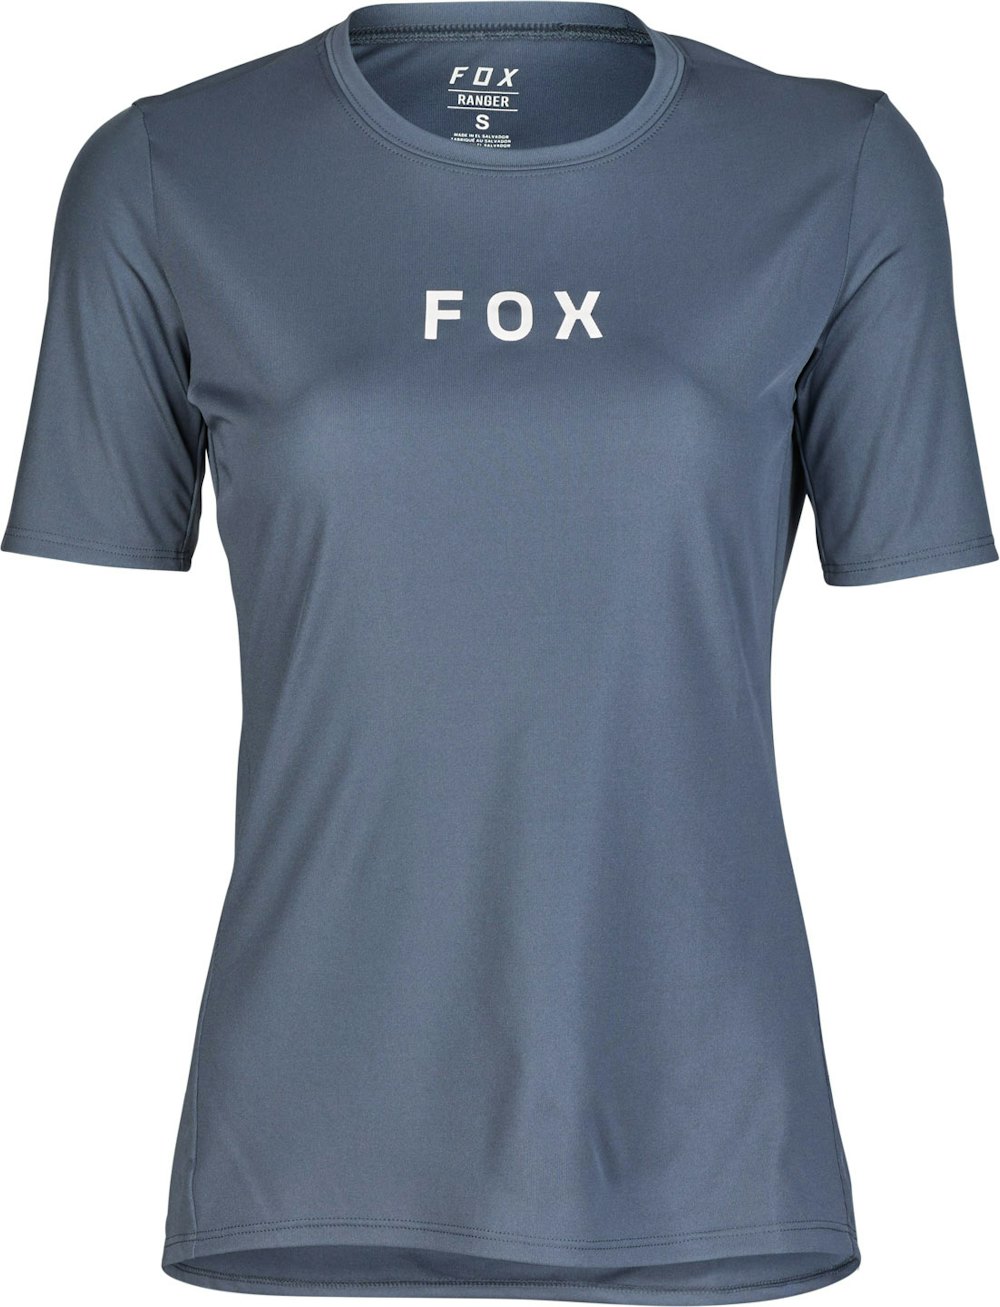 Fox Women's Ranger Short Sleeve Wordmark Jersey